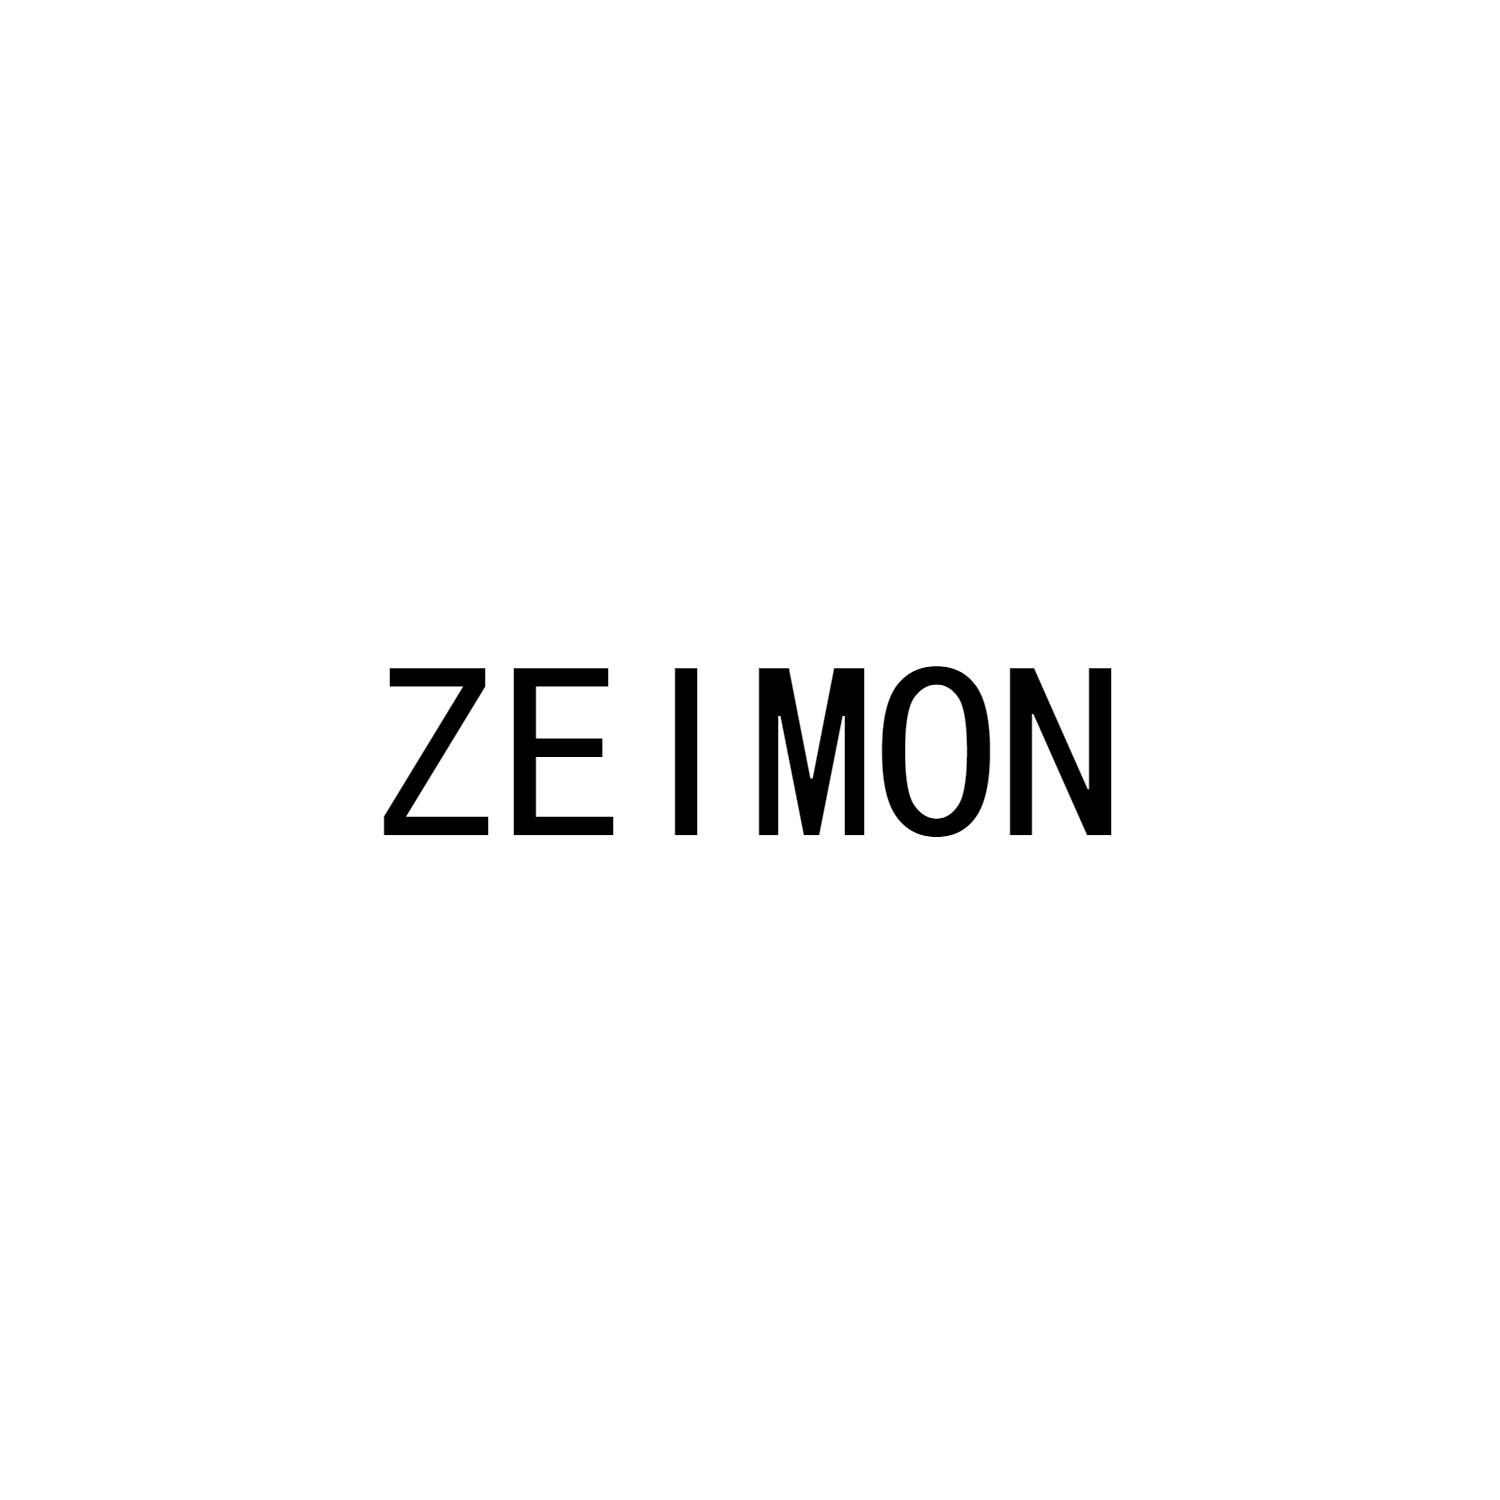 ZEIMON